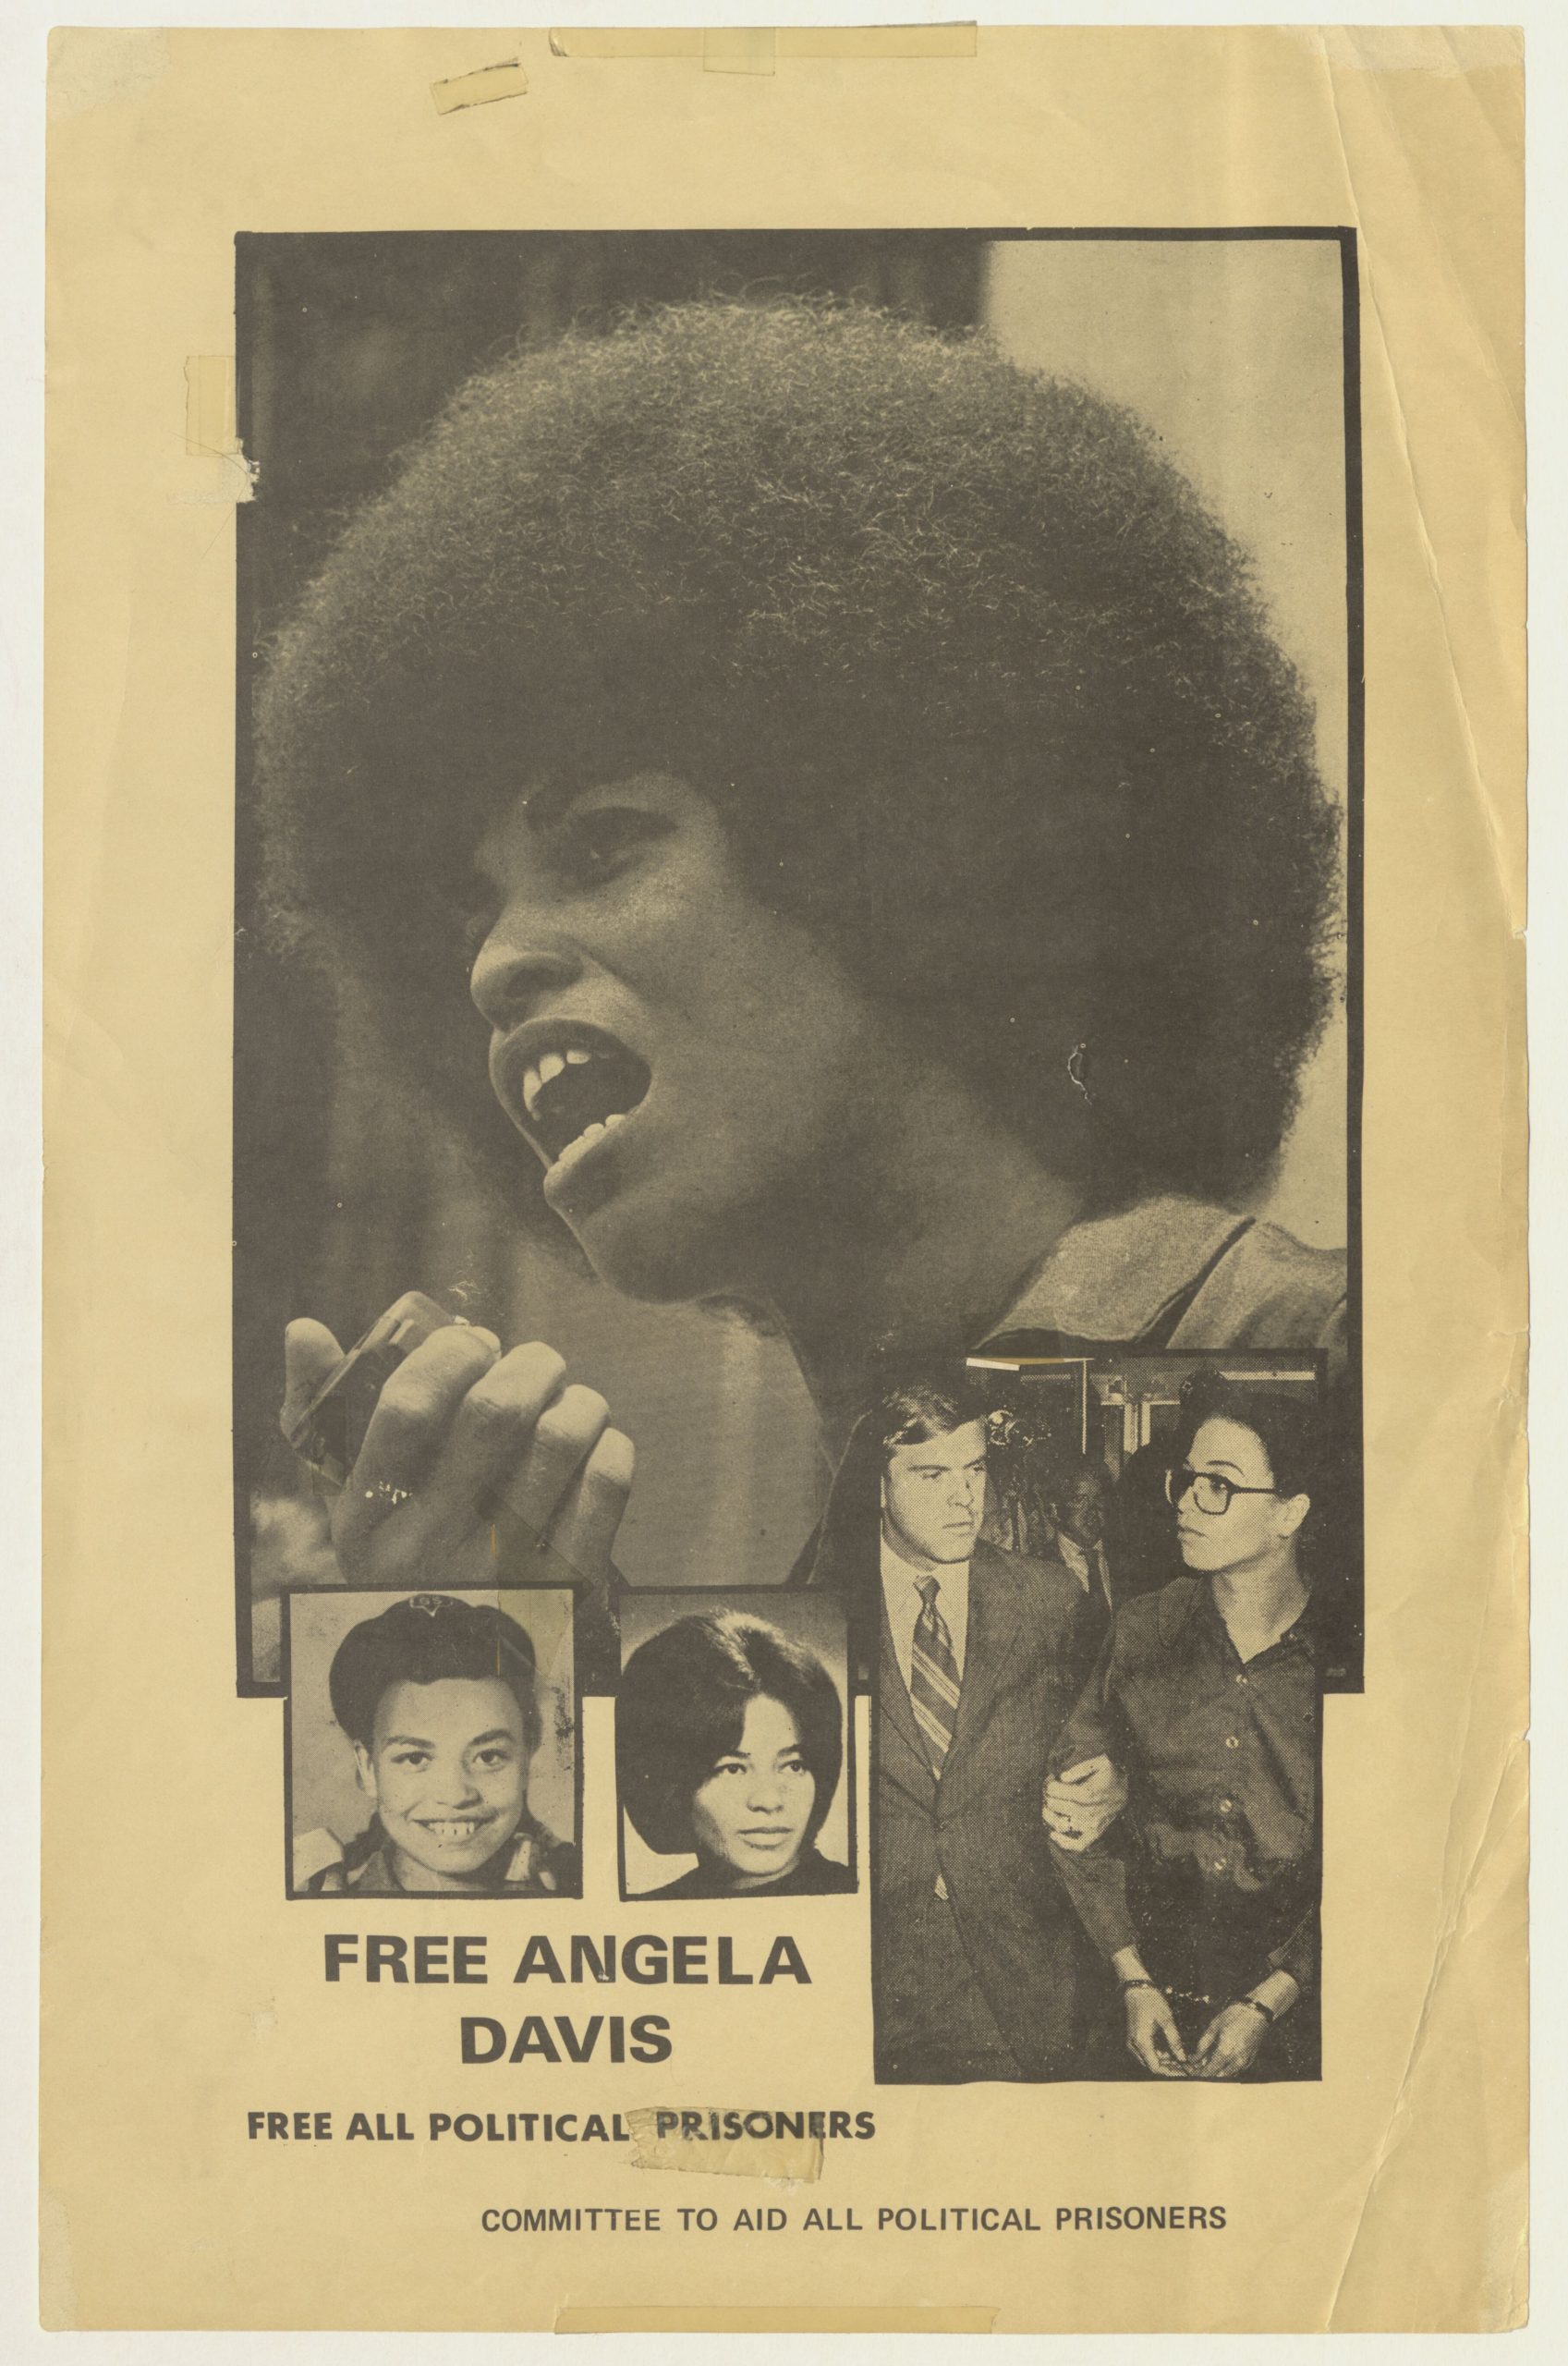 Free Angela Davis Poster, undated, David Taylor Papers